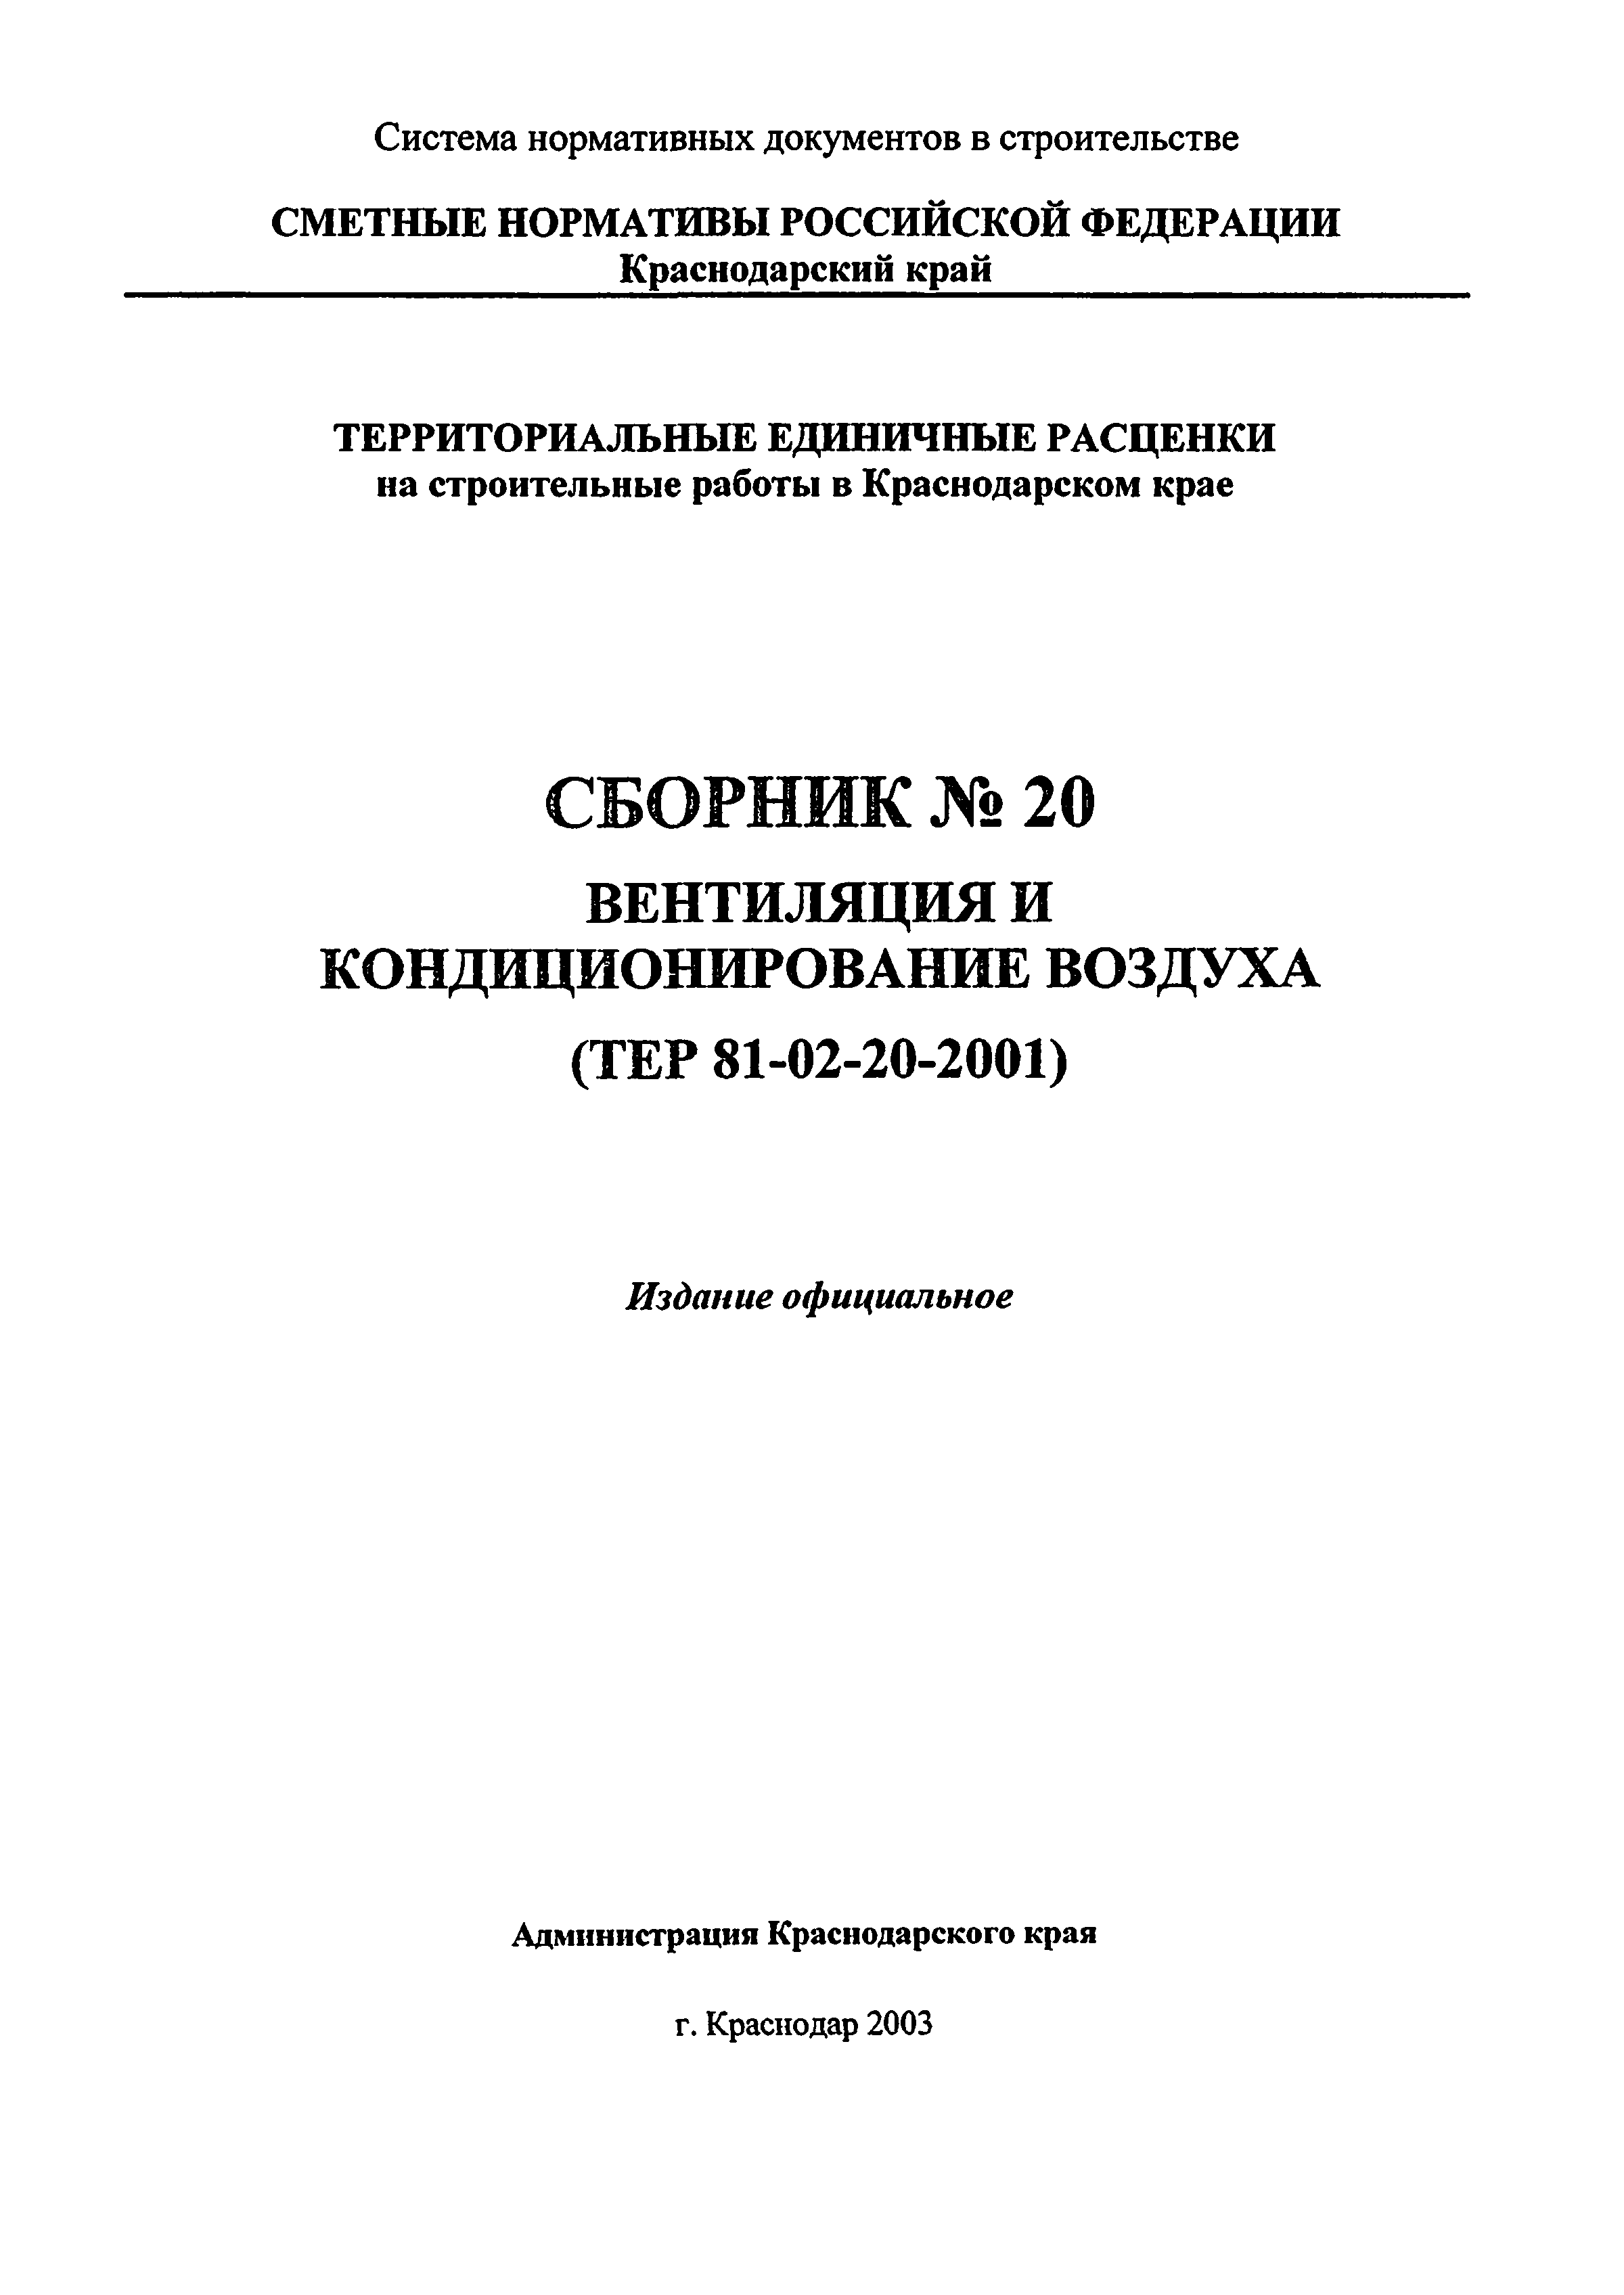 ТЕР Краснодарского края 2001-20